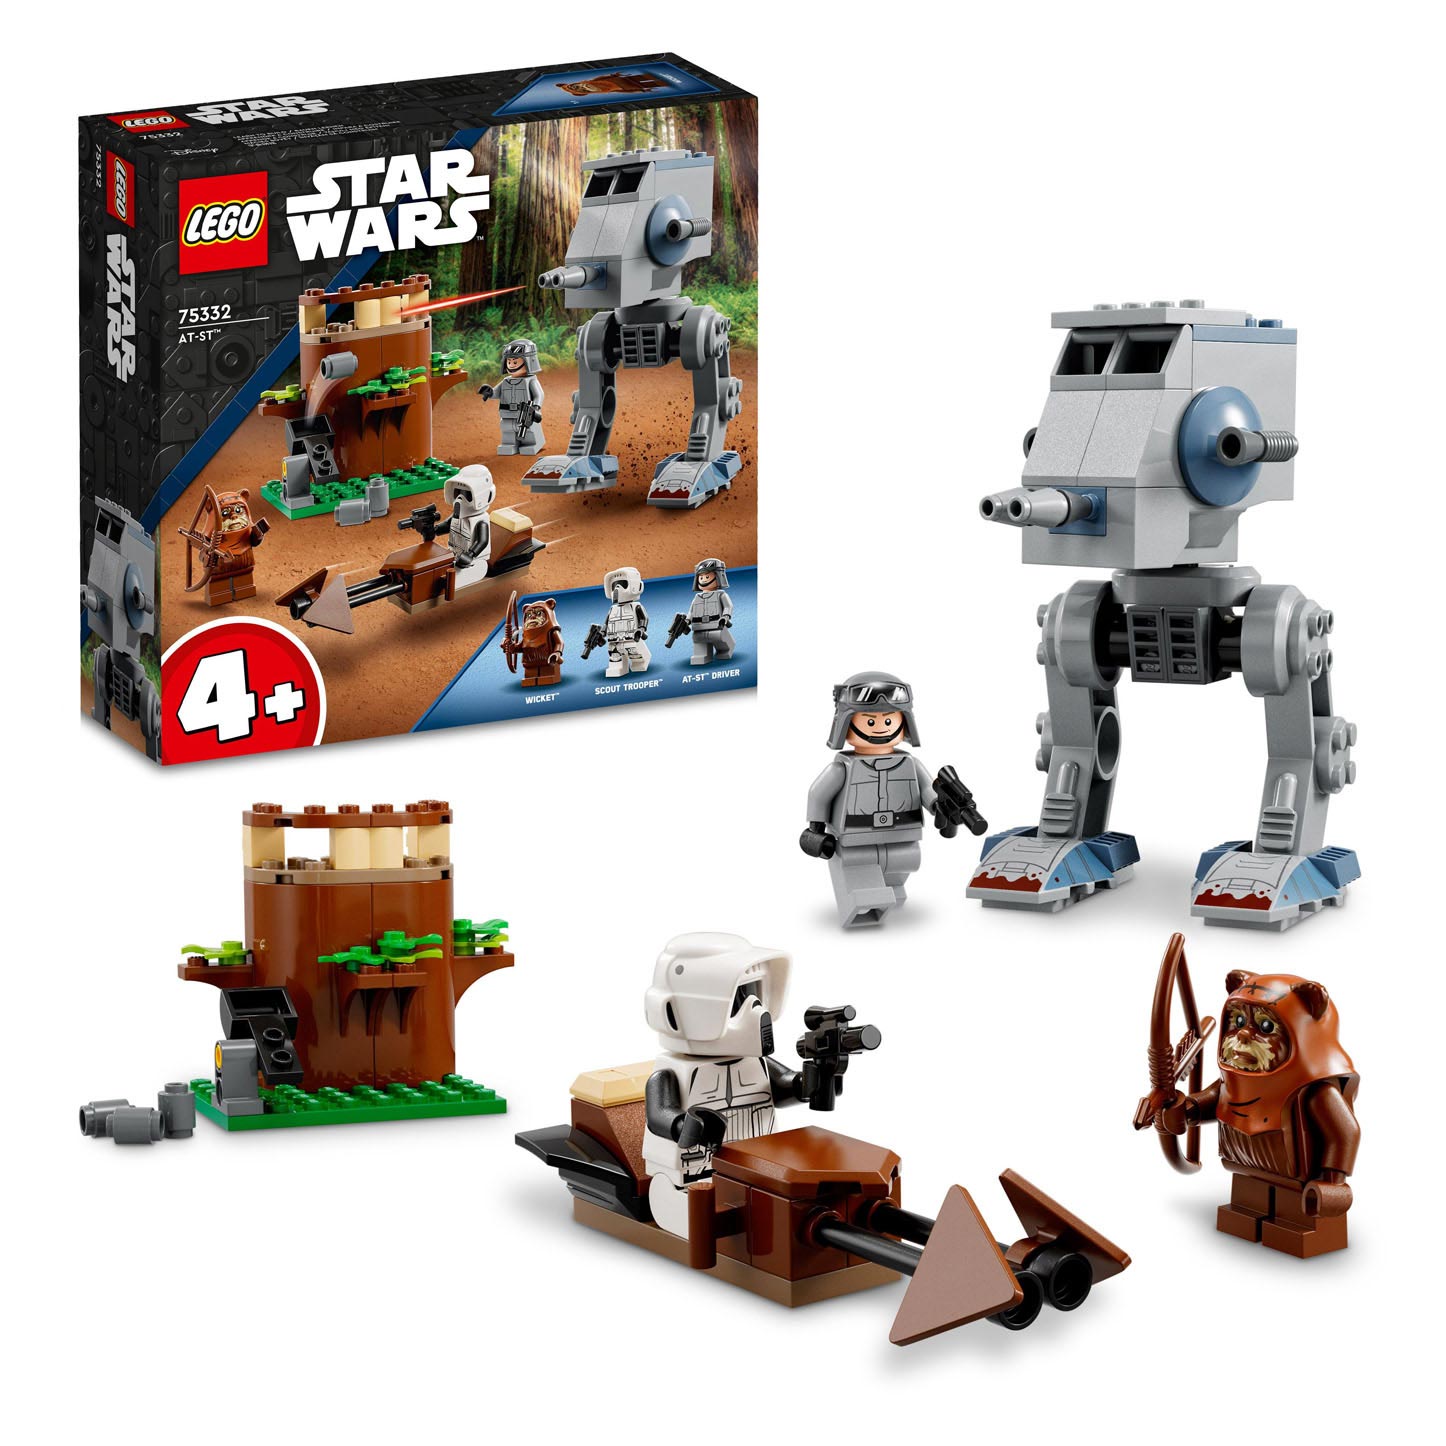 LEGO Star Wars 75332 AT-ST online kopen? |